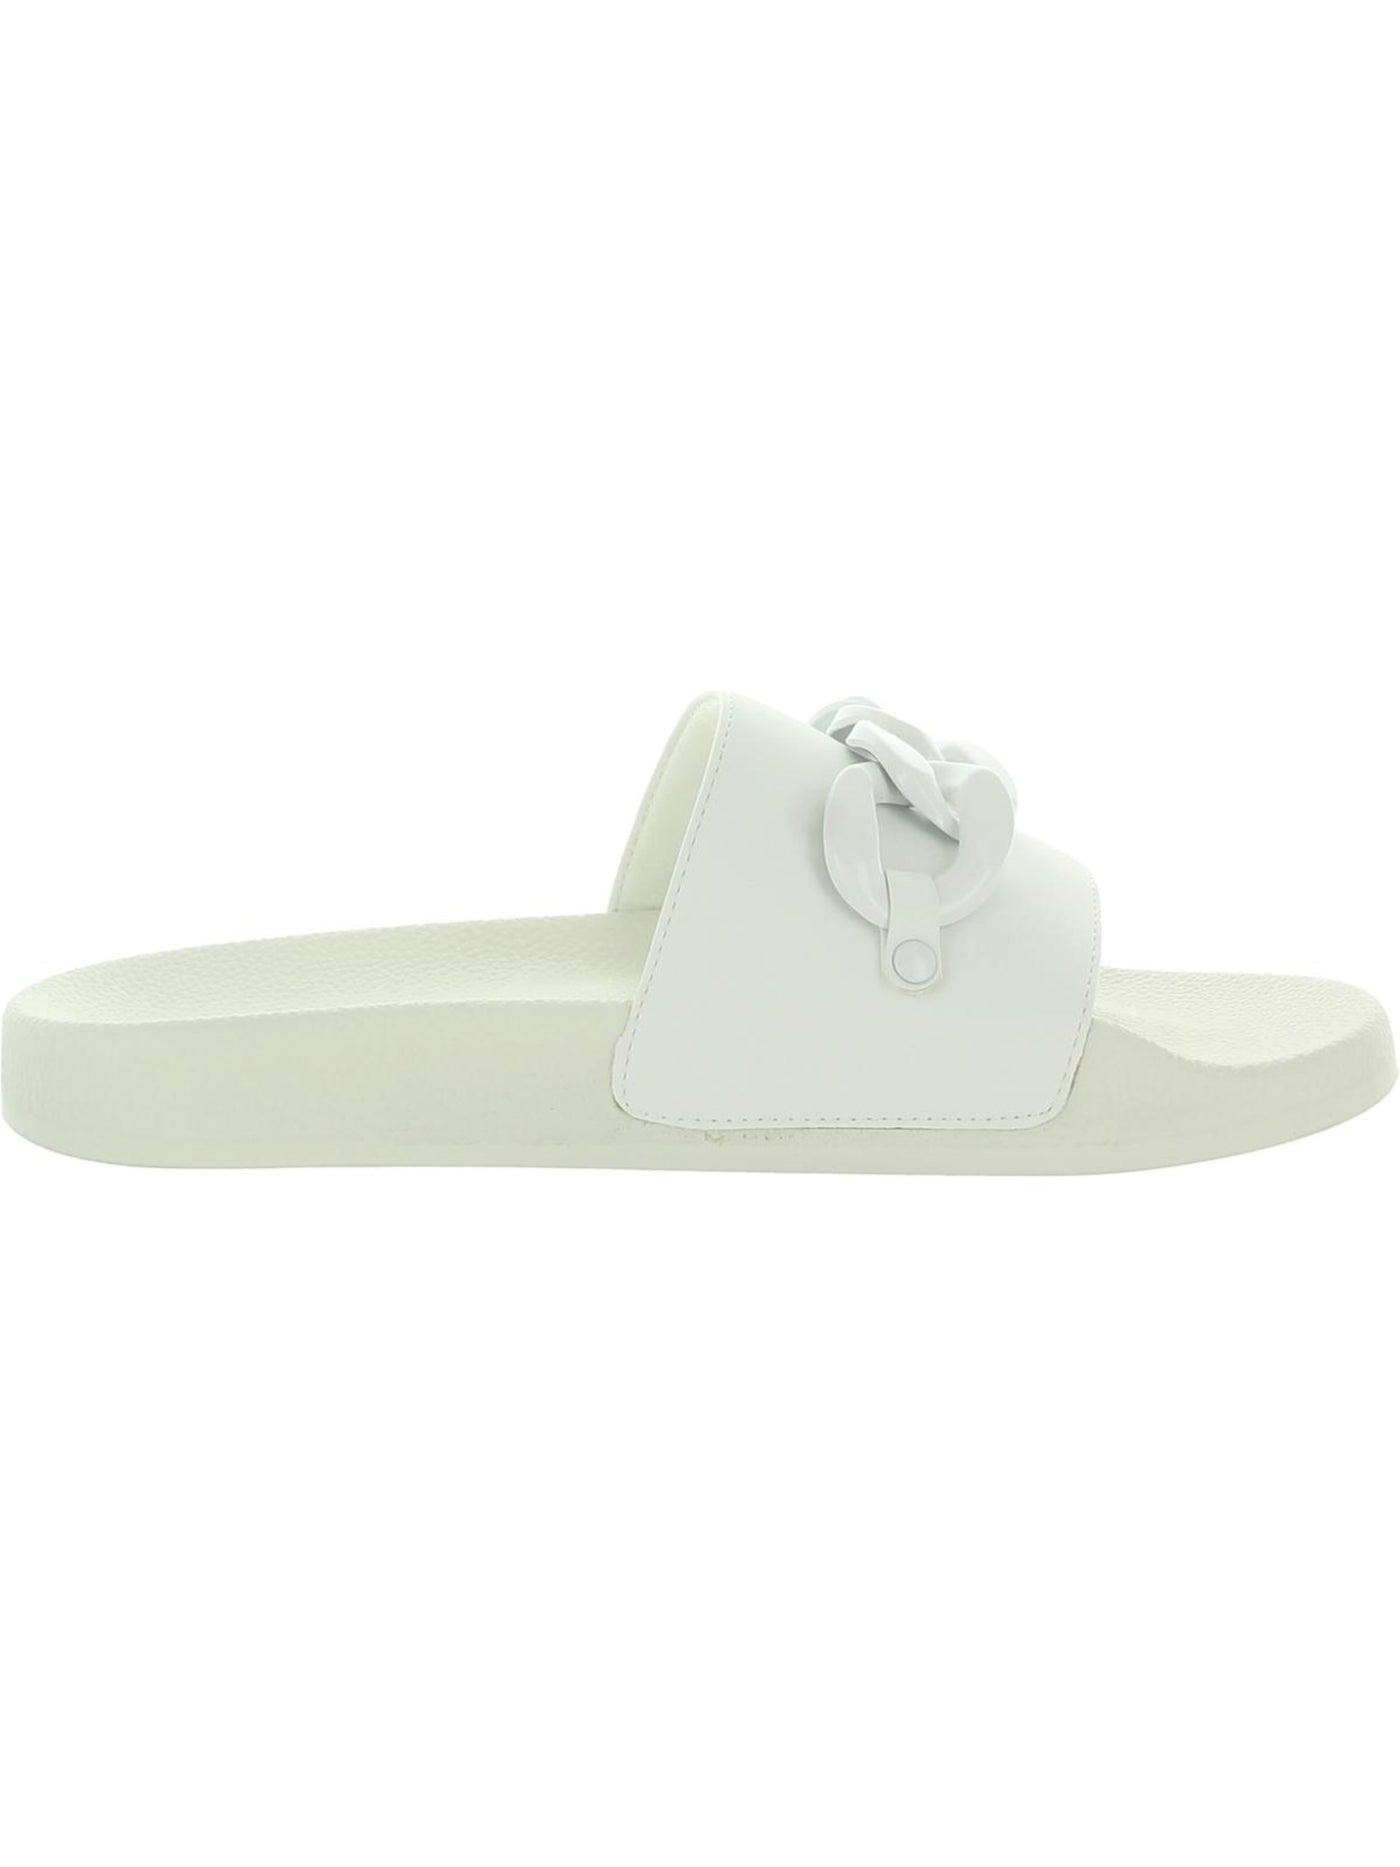 INC Womens White Chain Detail Comfort Peymin Round Toe Platform Slip On Slide Sandals Shoes 6 M